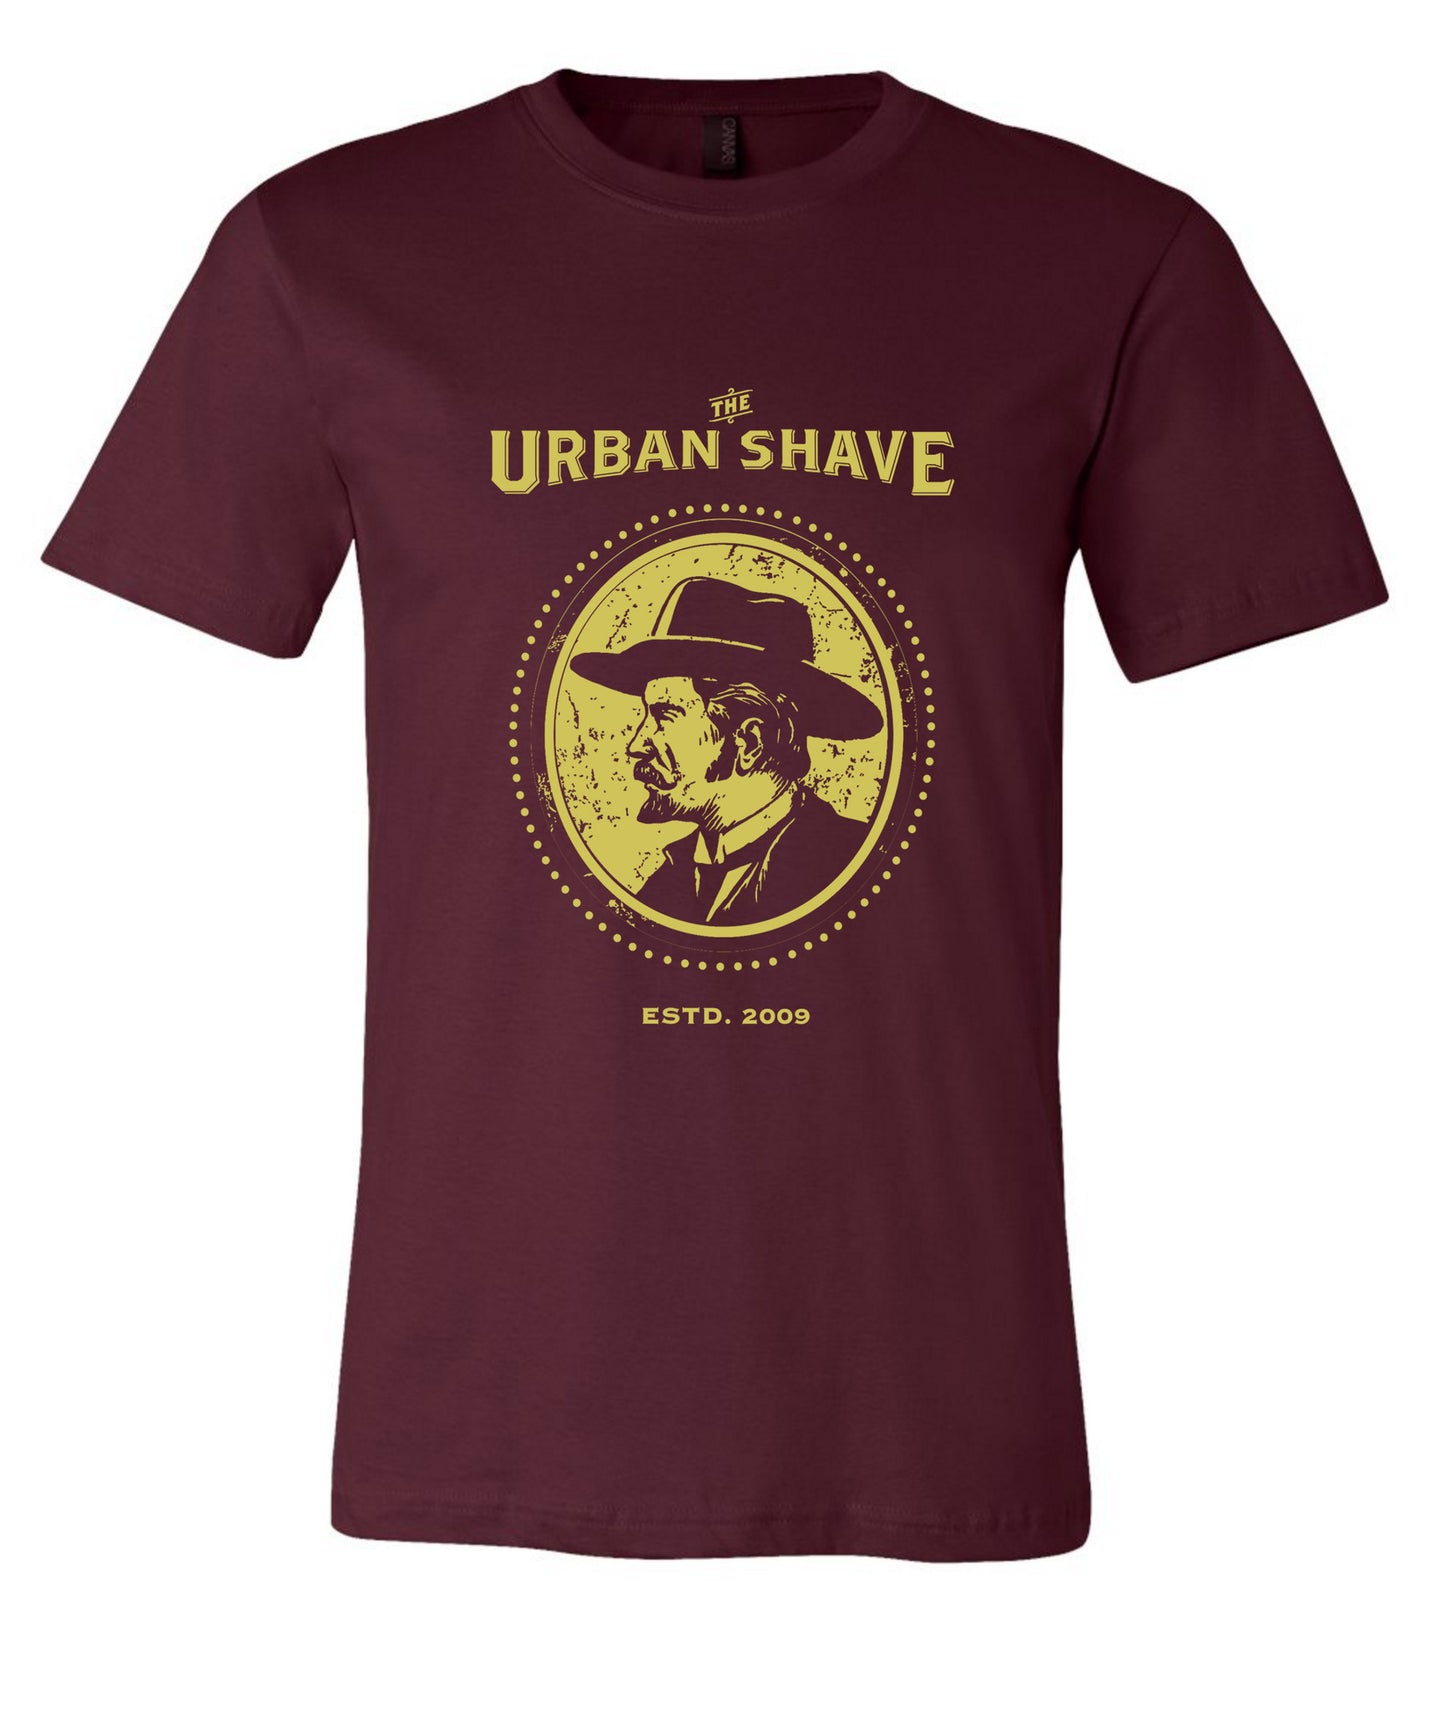 Urban Shave - Icon Tee (Burgundy/Mustard)